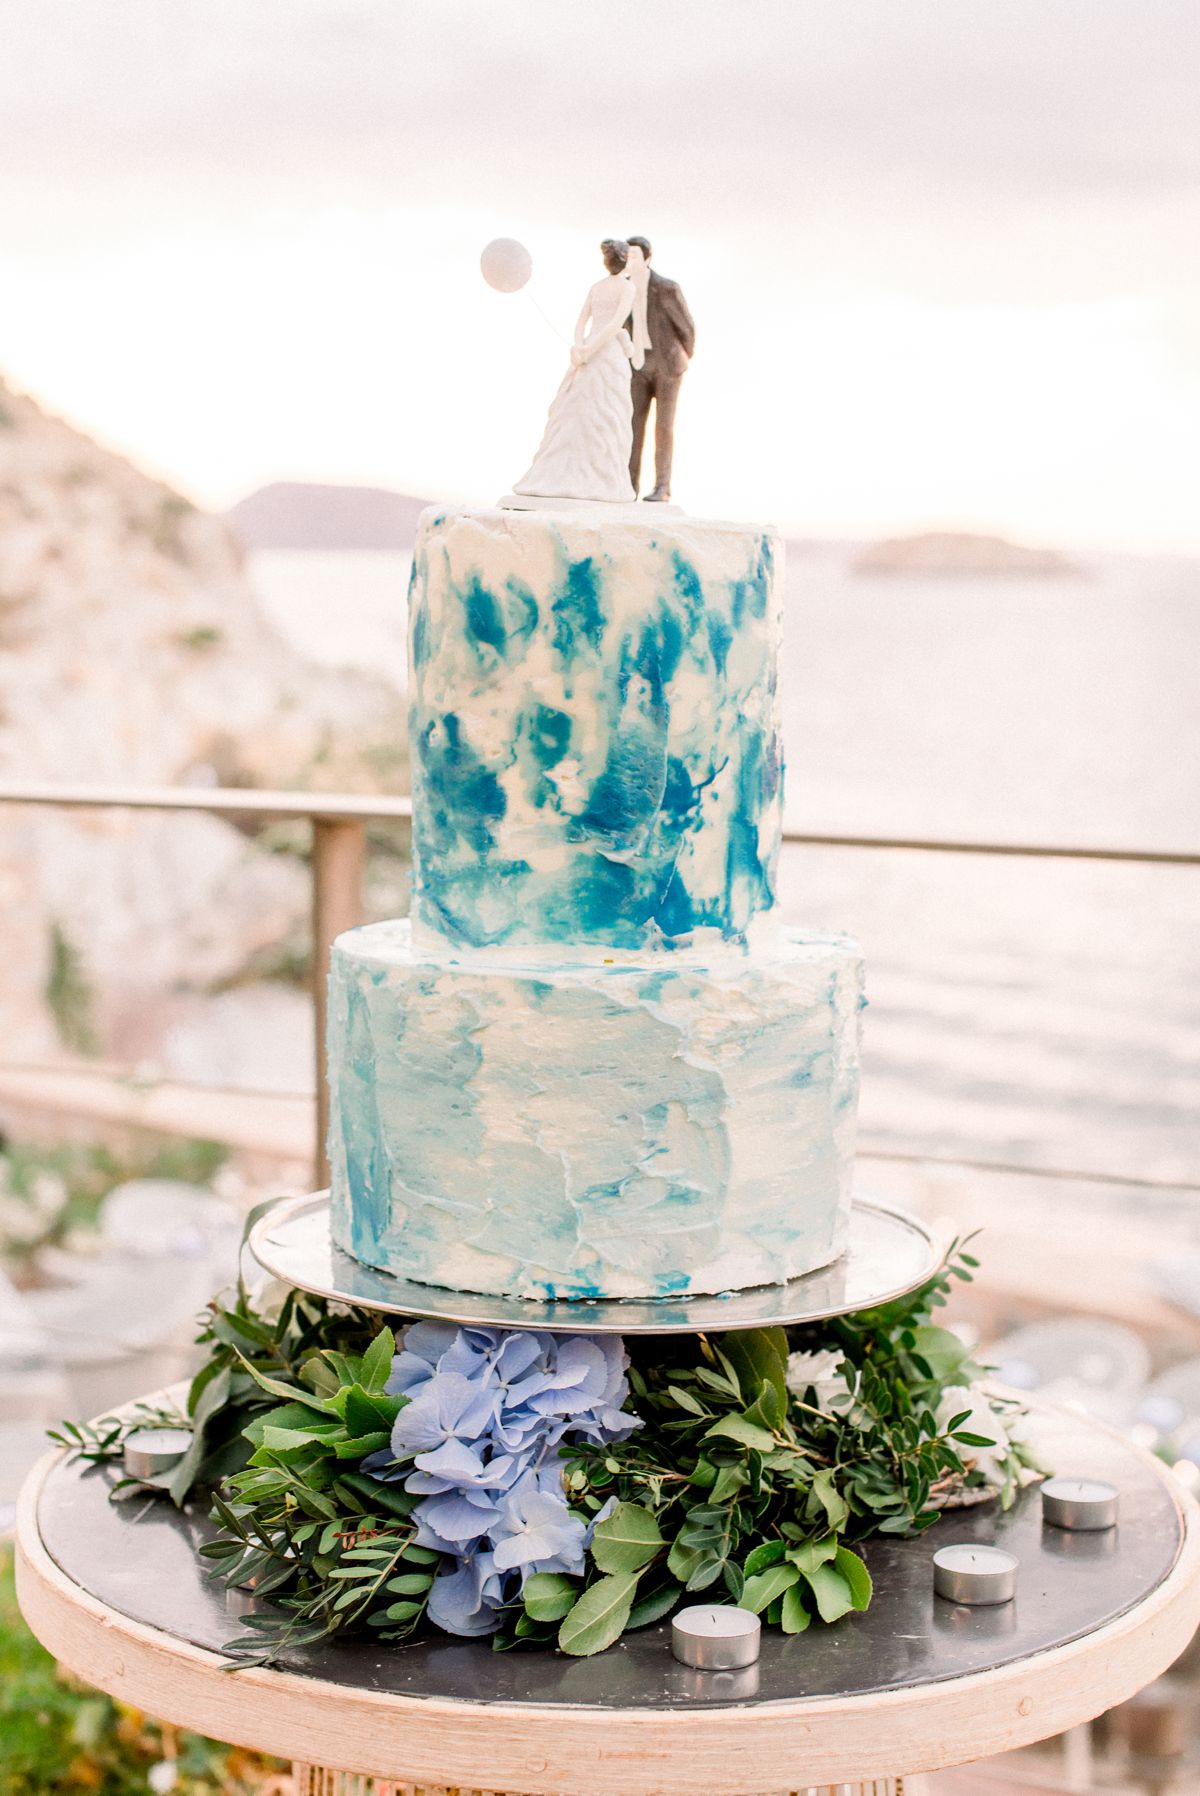 Hydra wedding cake